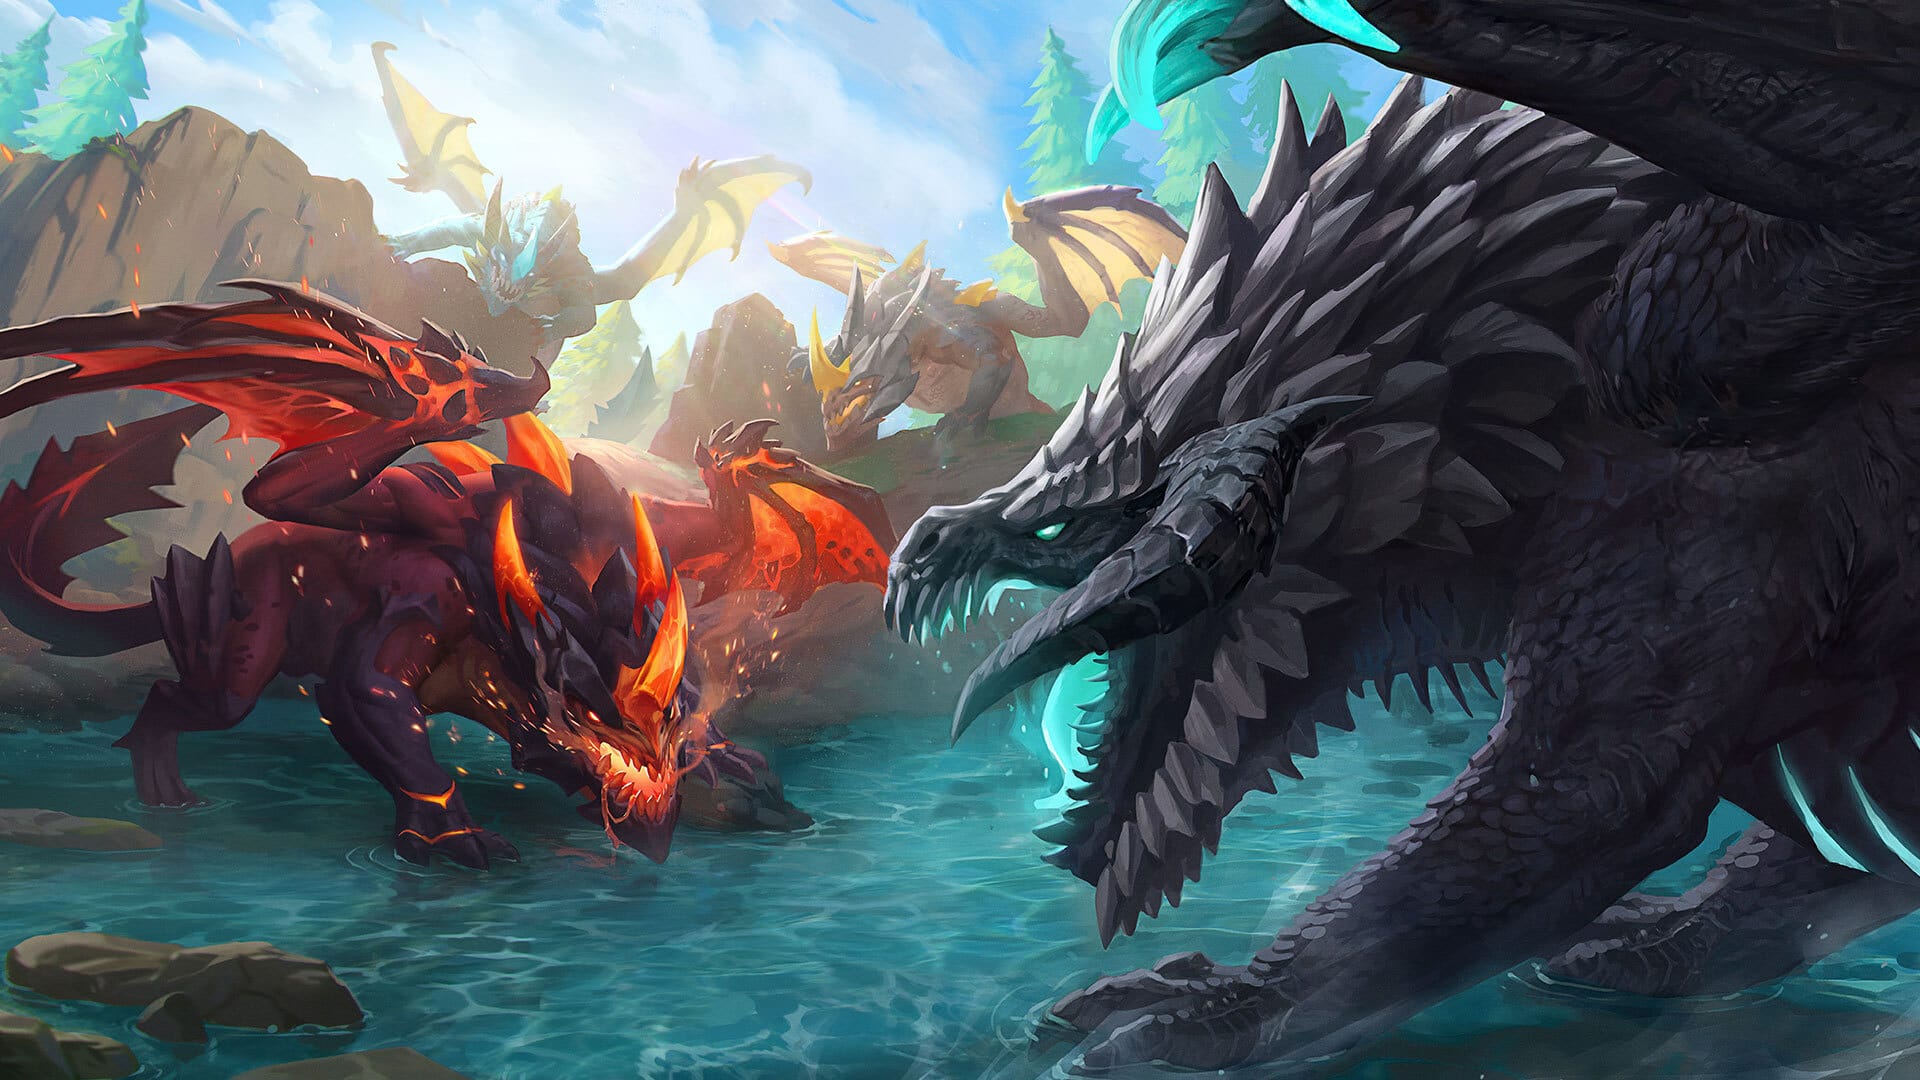 The Infernal, Mountain, Elder, and Ocean Dragons of Elemental Rift join with ferocity.